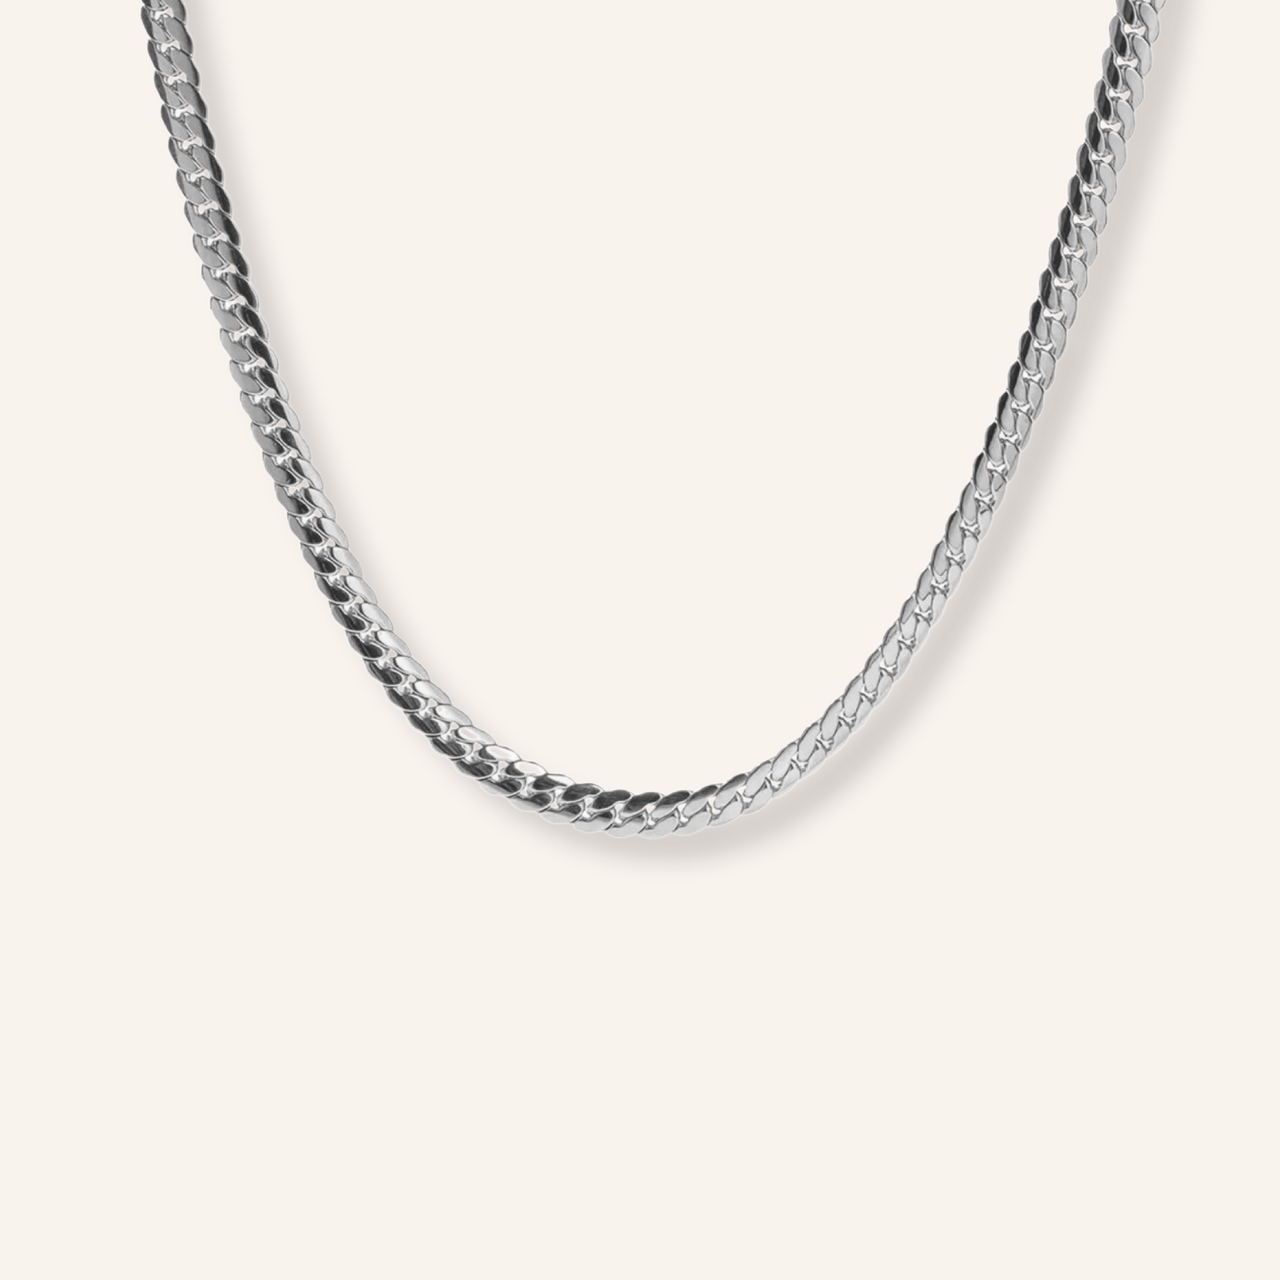 Danella Silver necklace